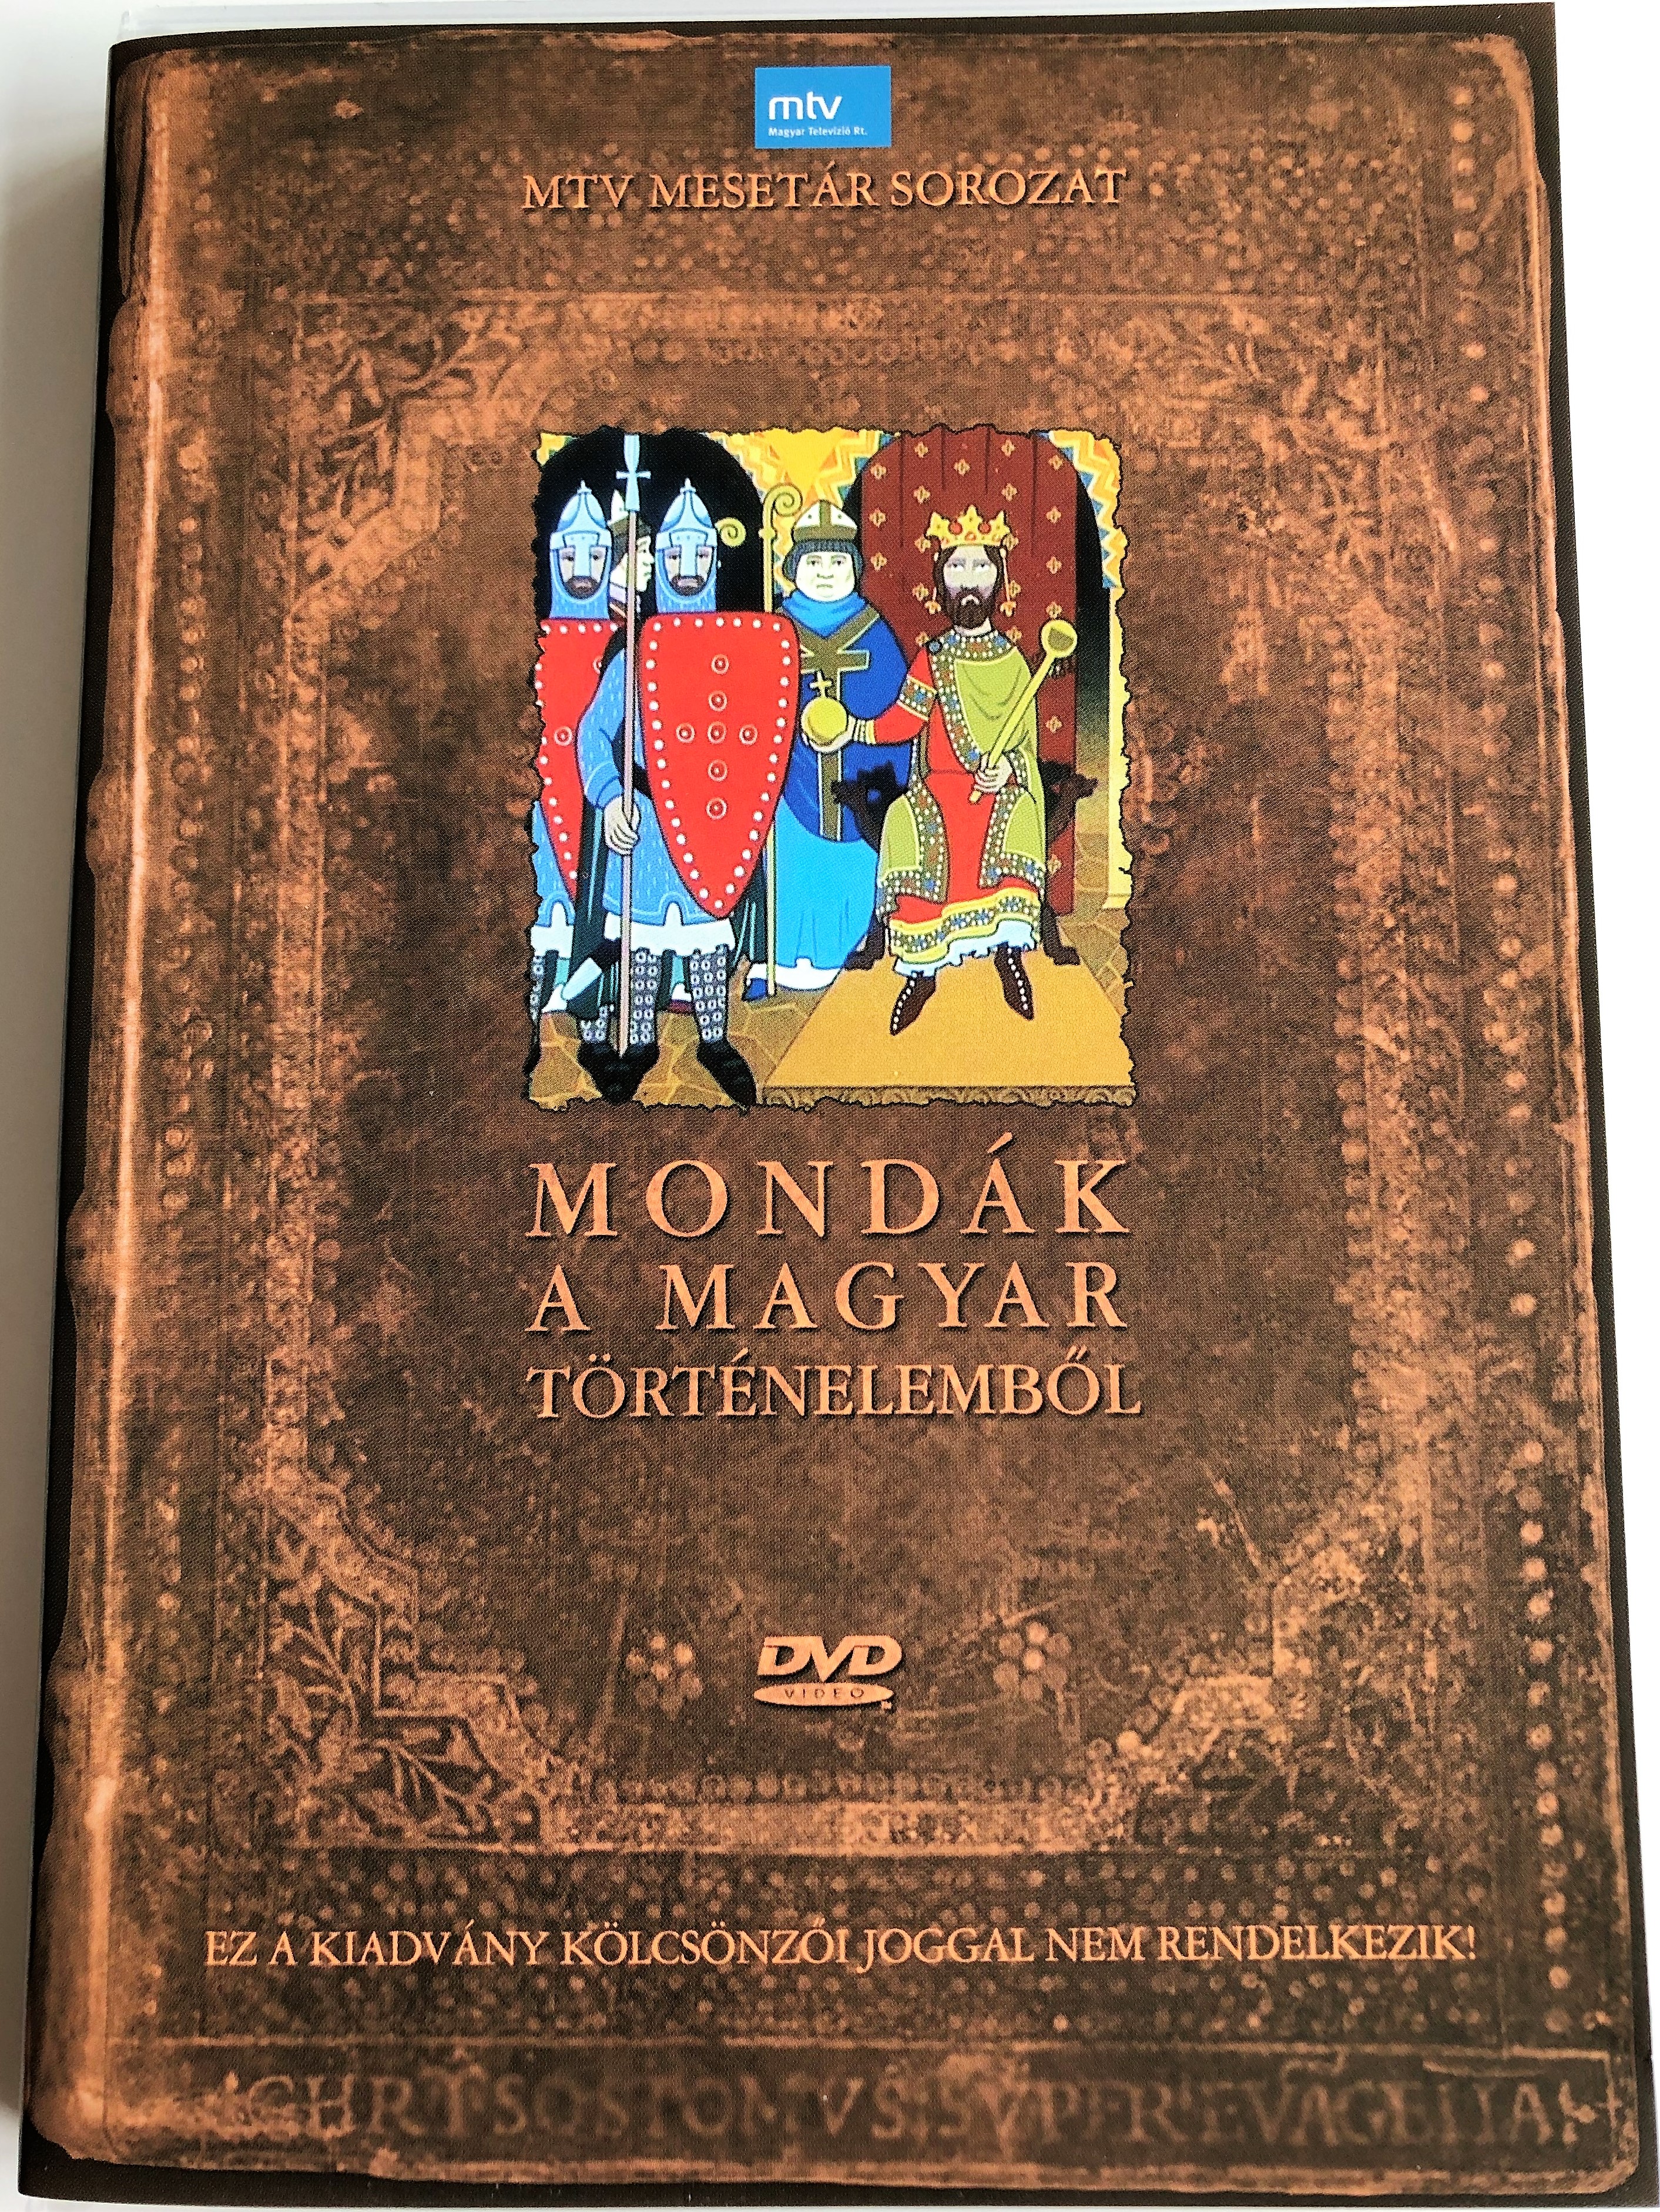 mond-k-a-magyar-t-rt-nelemb-l-dvd-1988-legends-from-hungarian-history-directed-by-jankovics-marcell-mtv-meset-r-sorozat-1-.jpg